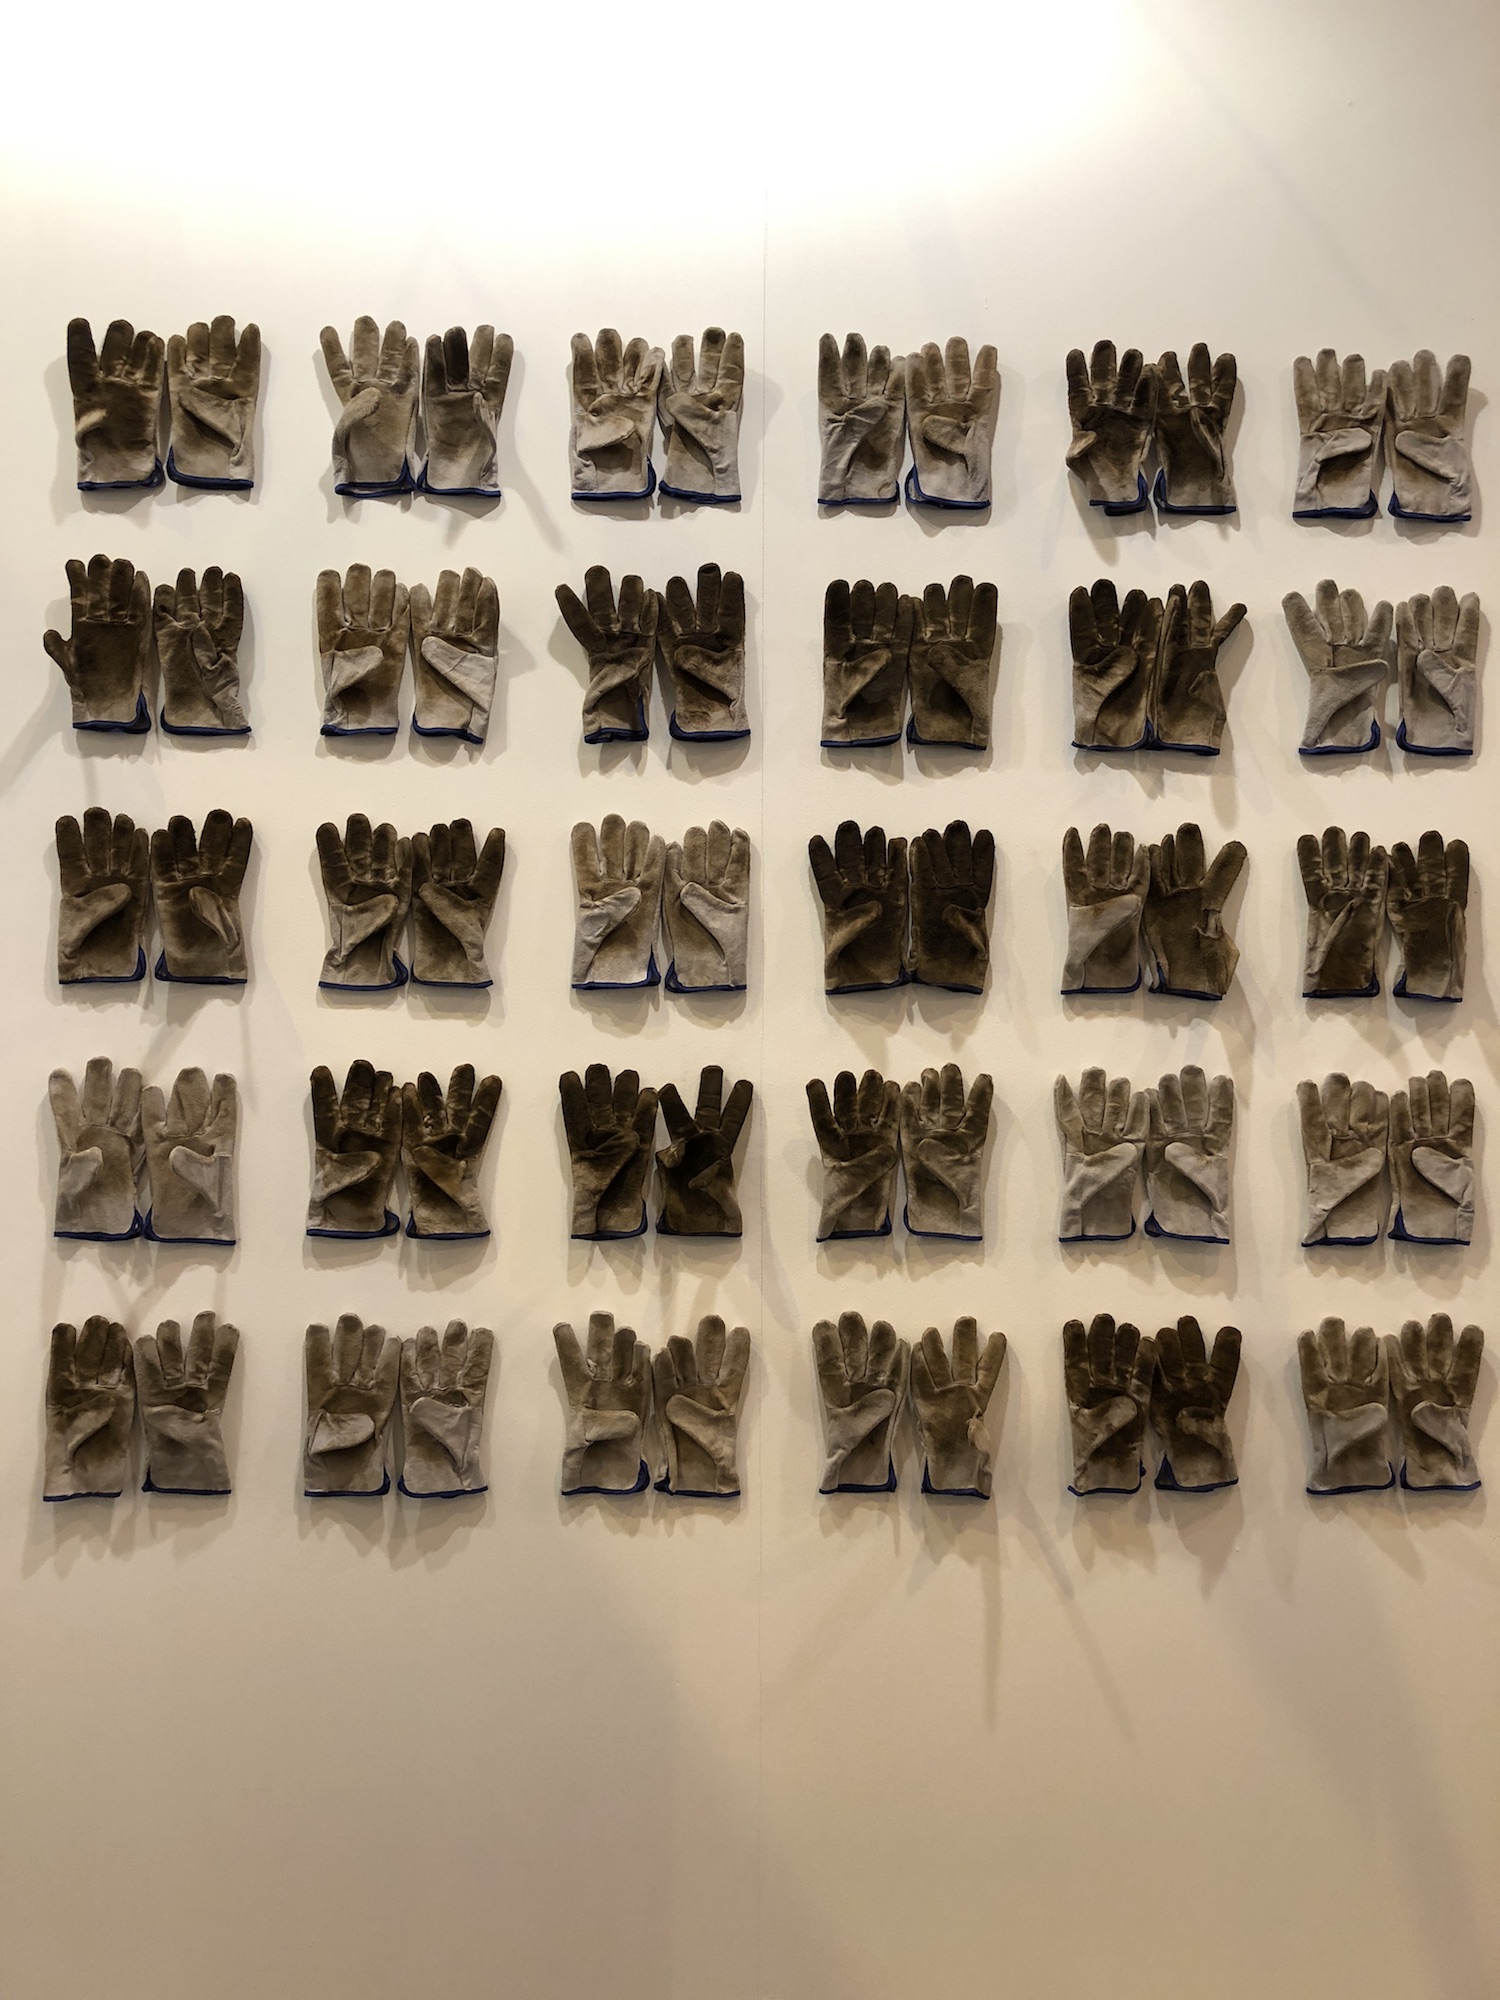 30 pairs of gloves - Hector Zamora